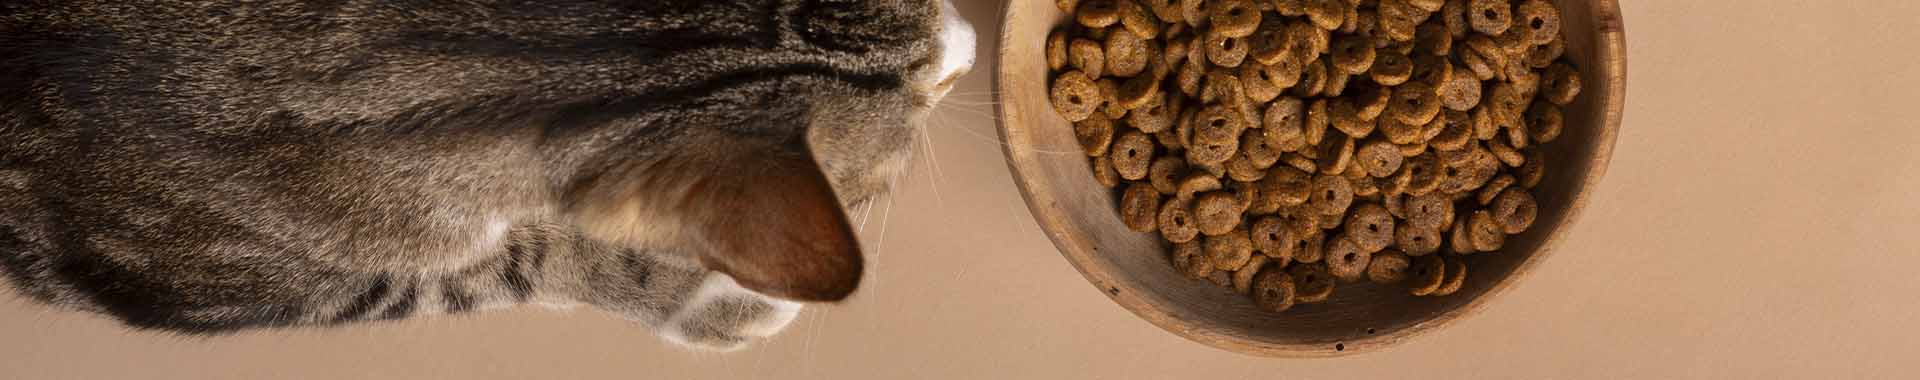 consejos-alimentacion-seca-gatos